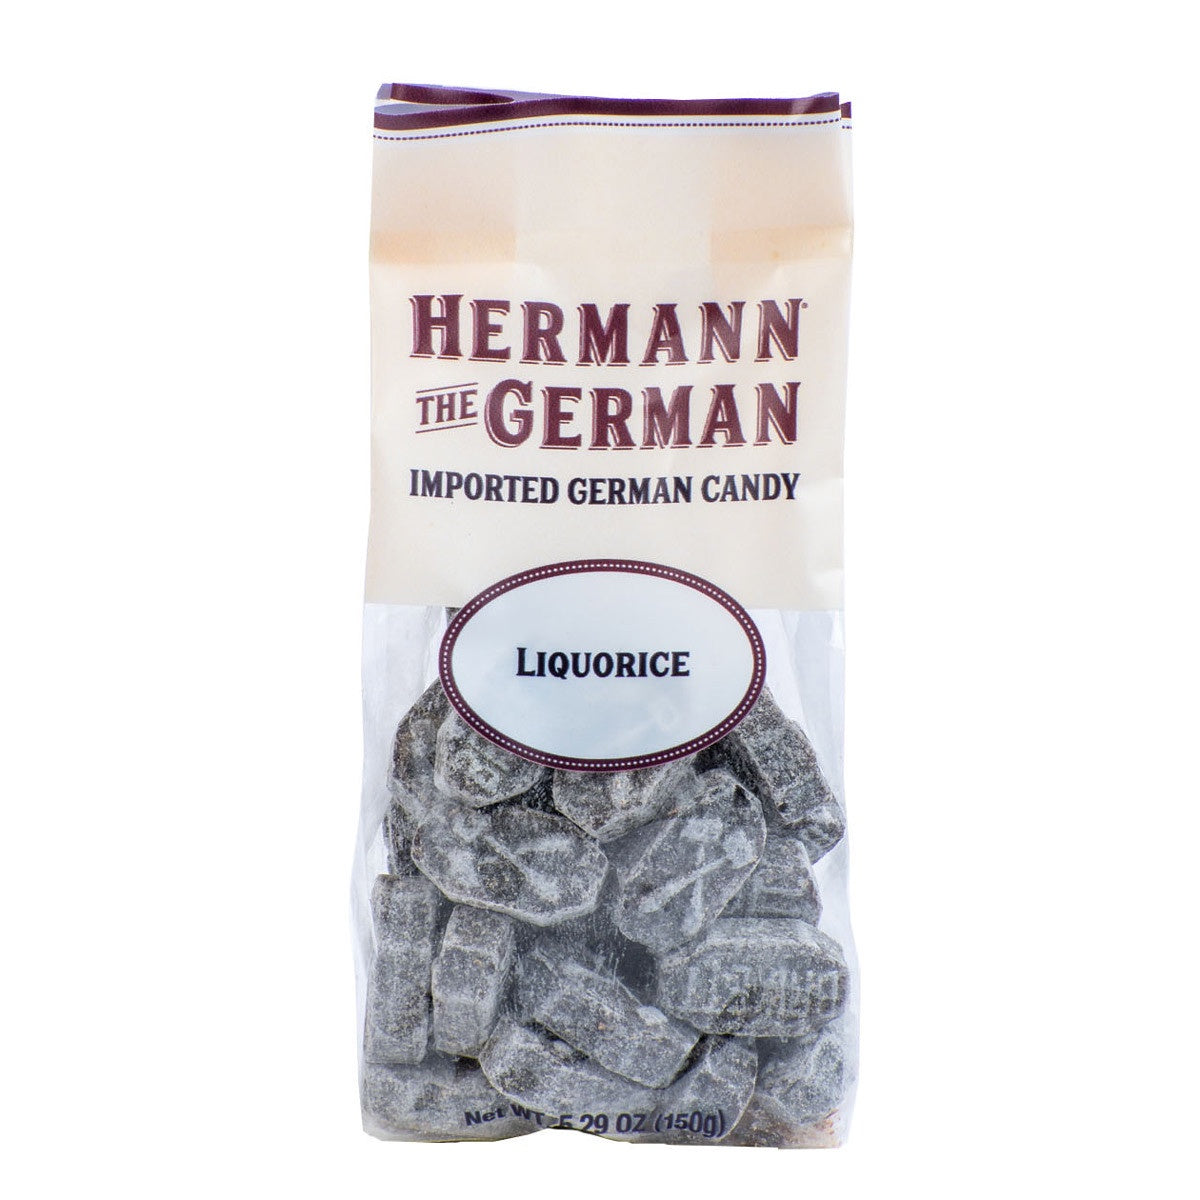 Hermann the German Liquorice Candy, 5.29 oz